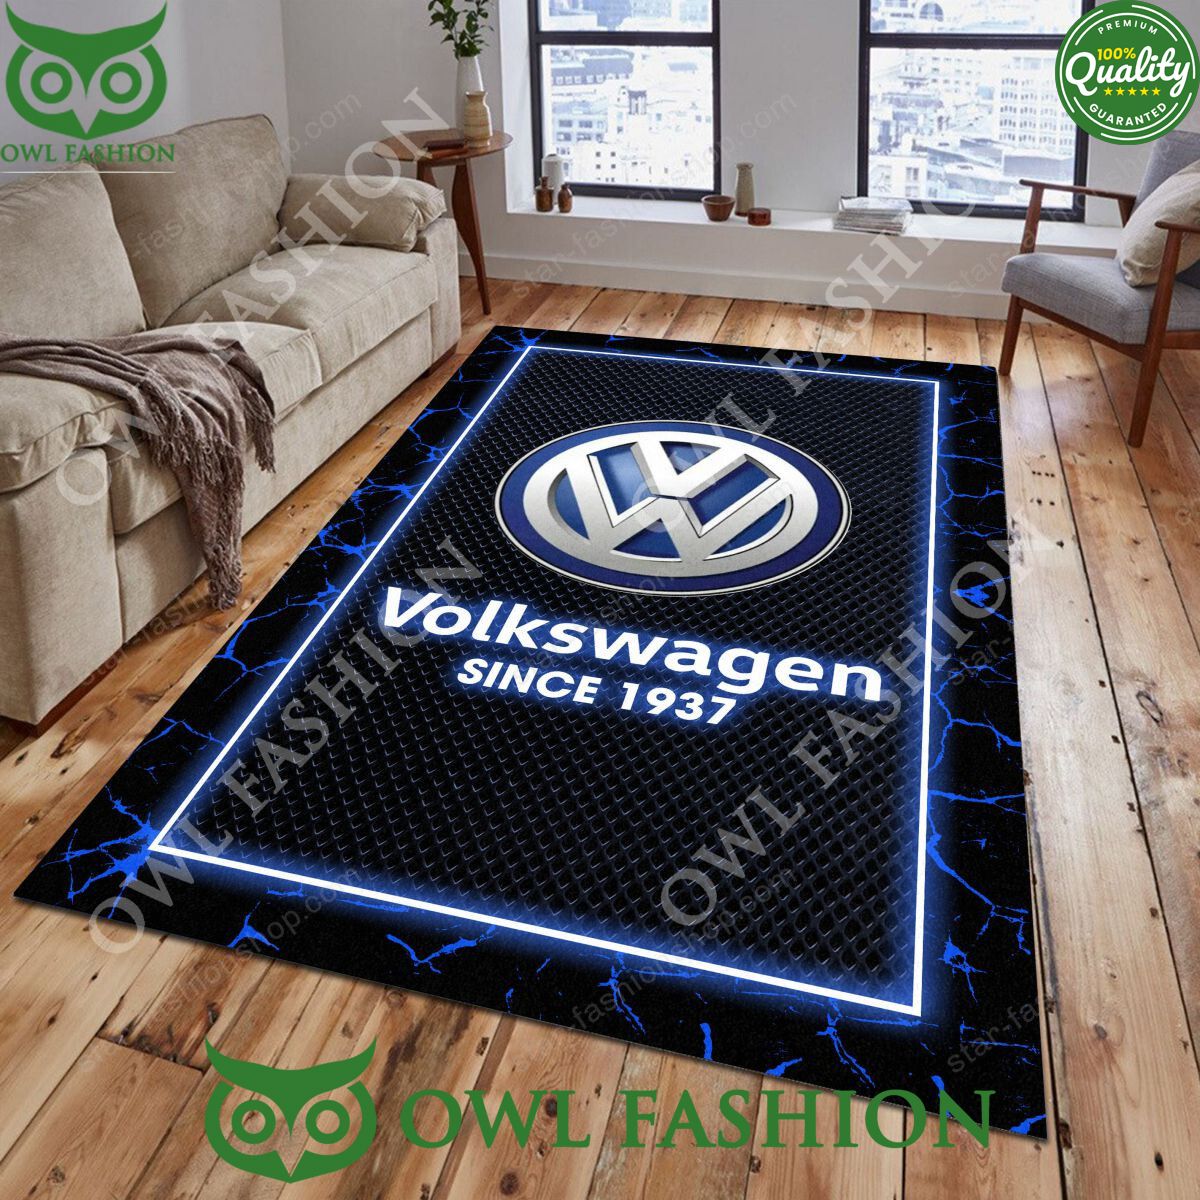 Volkswagen Germany 1937 Automobile Rug Carpet Decor Living Room